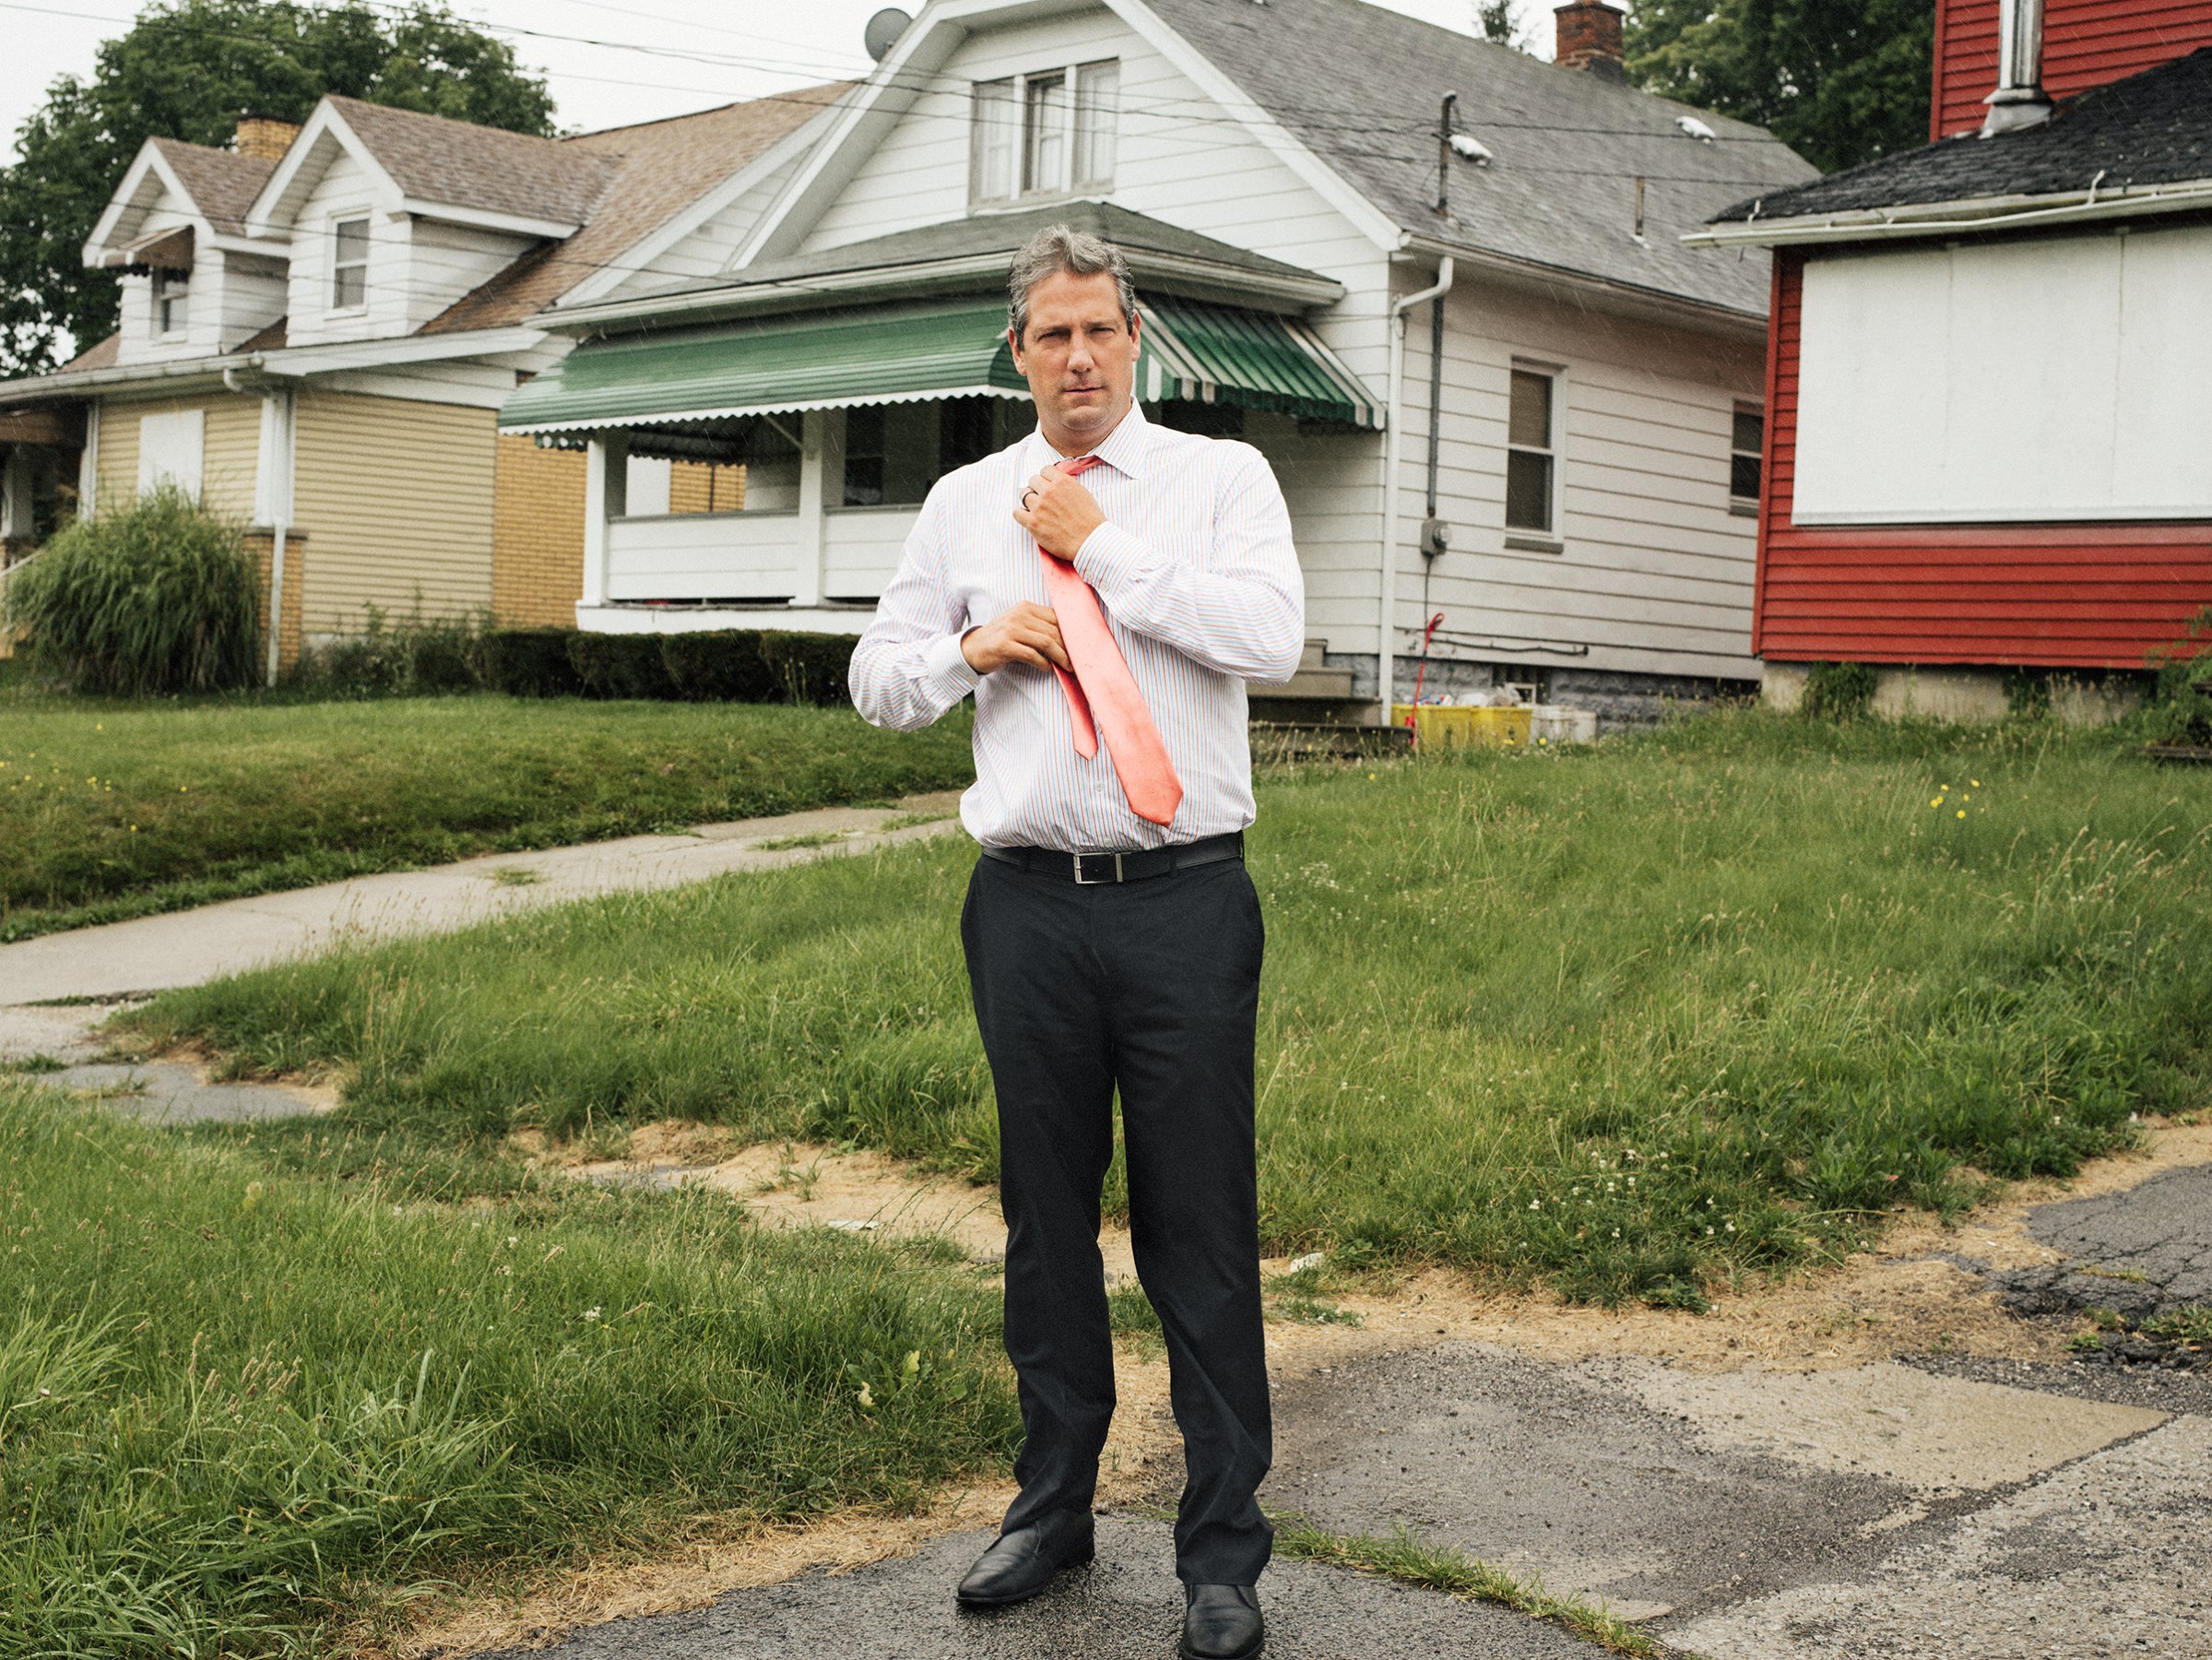 Democratic Congressman Tim Ryan visits a neighborhood in Youngstown, Ohio, on July 22